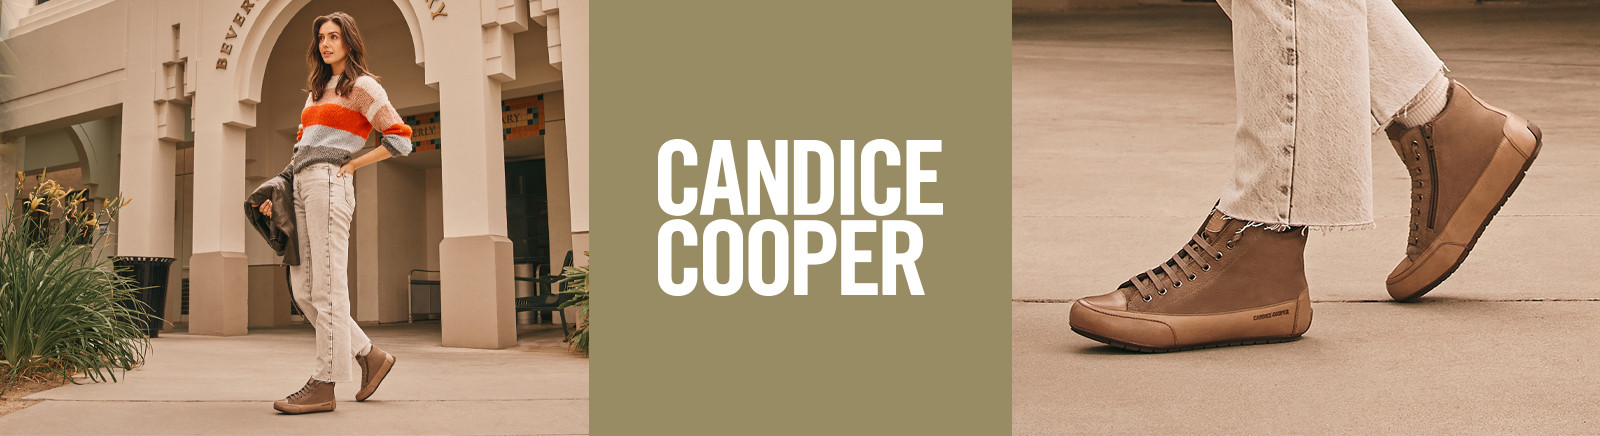 Juppen: Candice Cooper Winterschuhe für Herren online shoppen